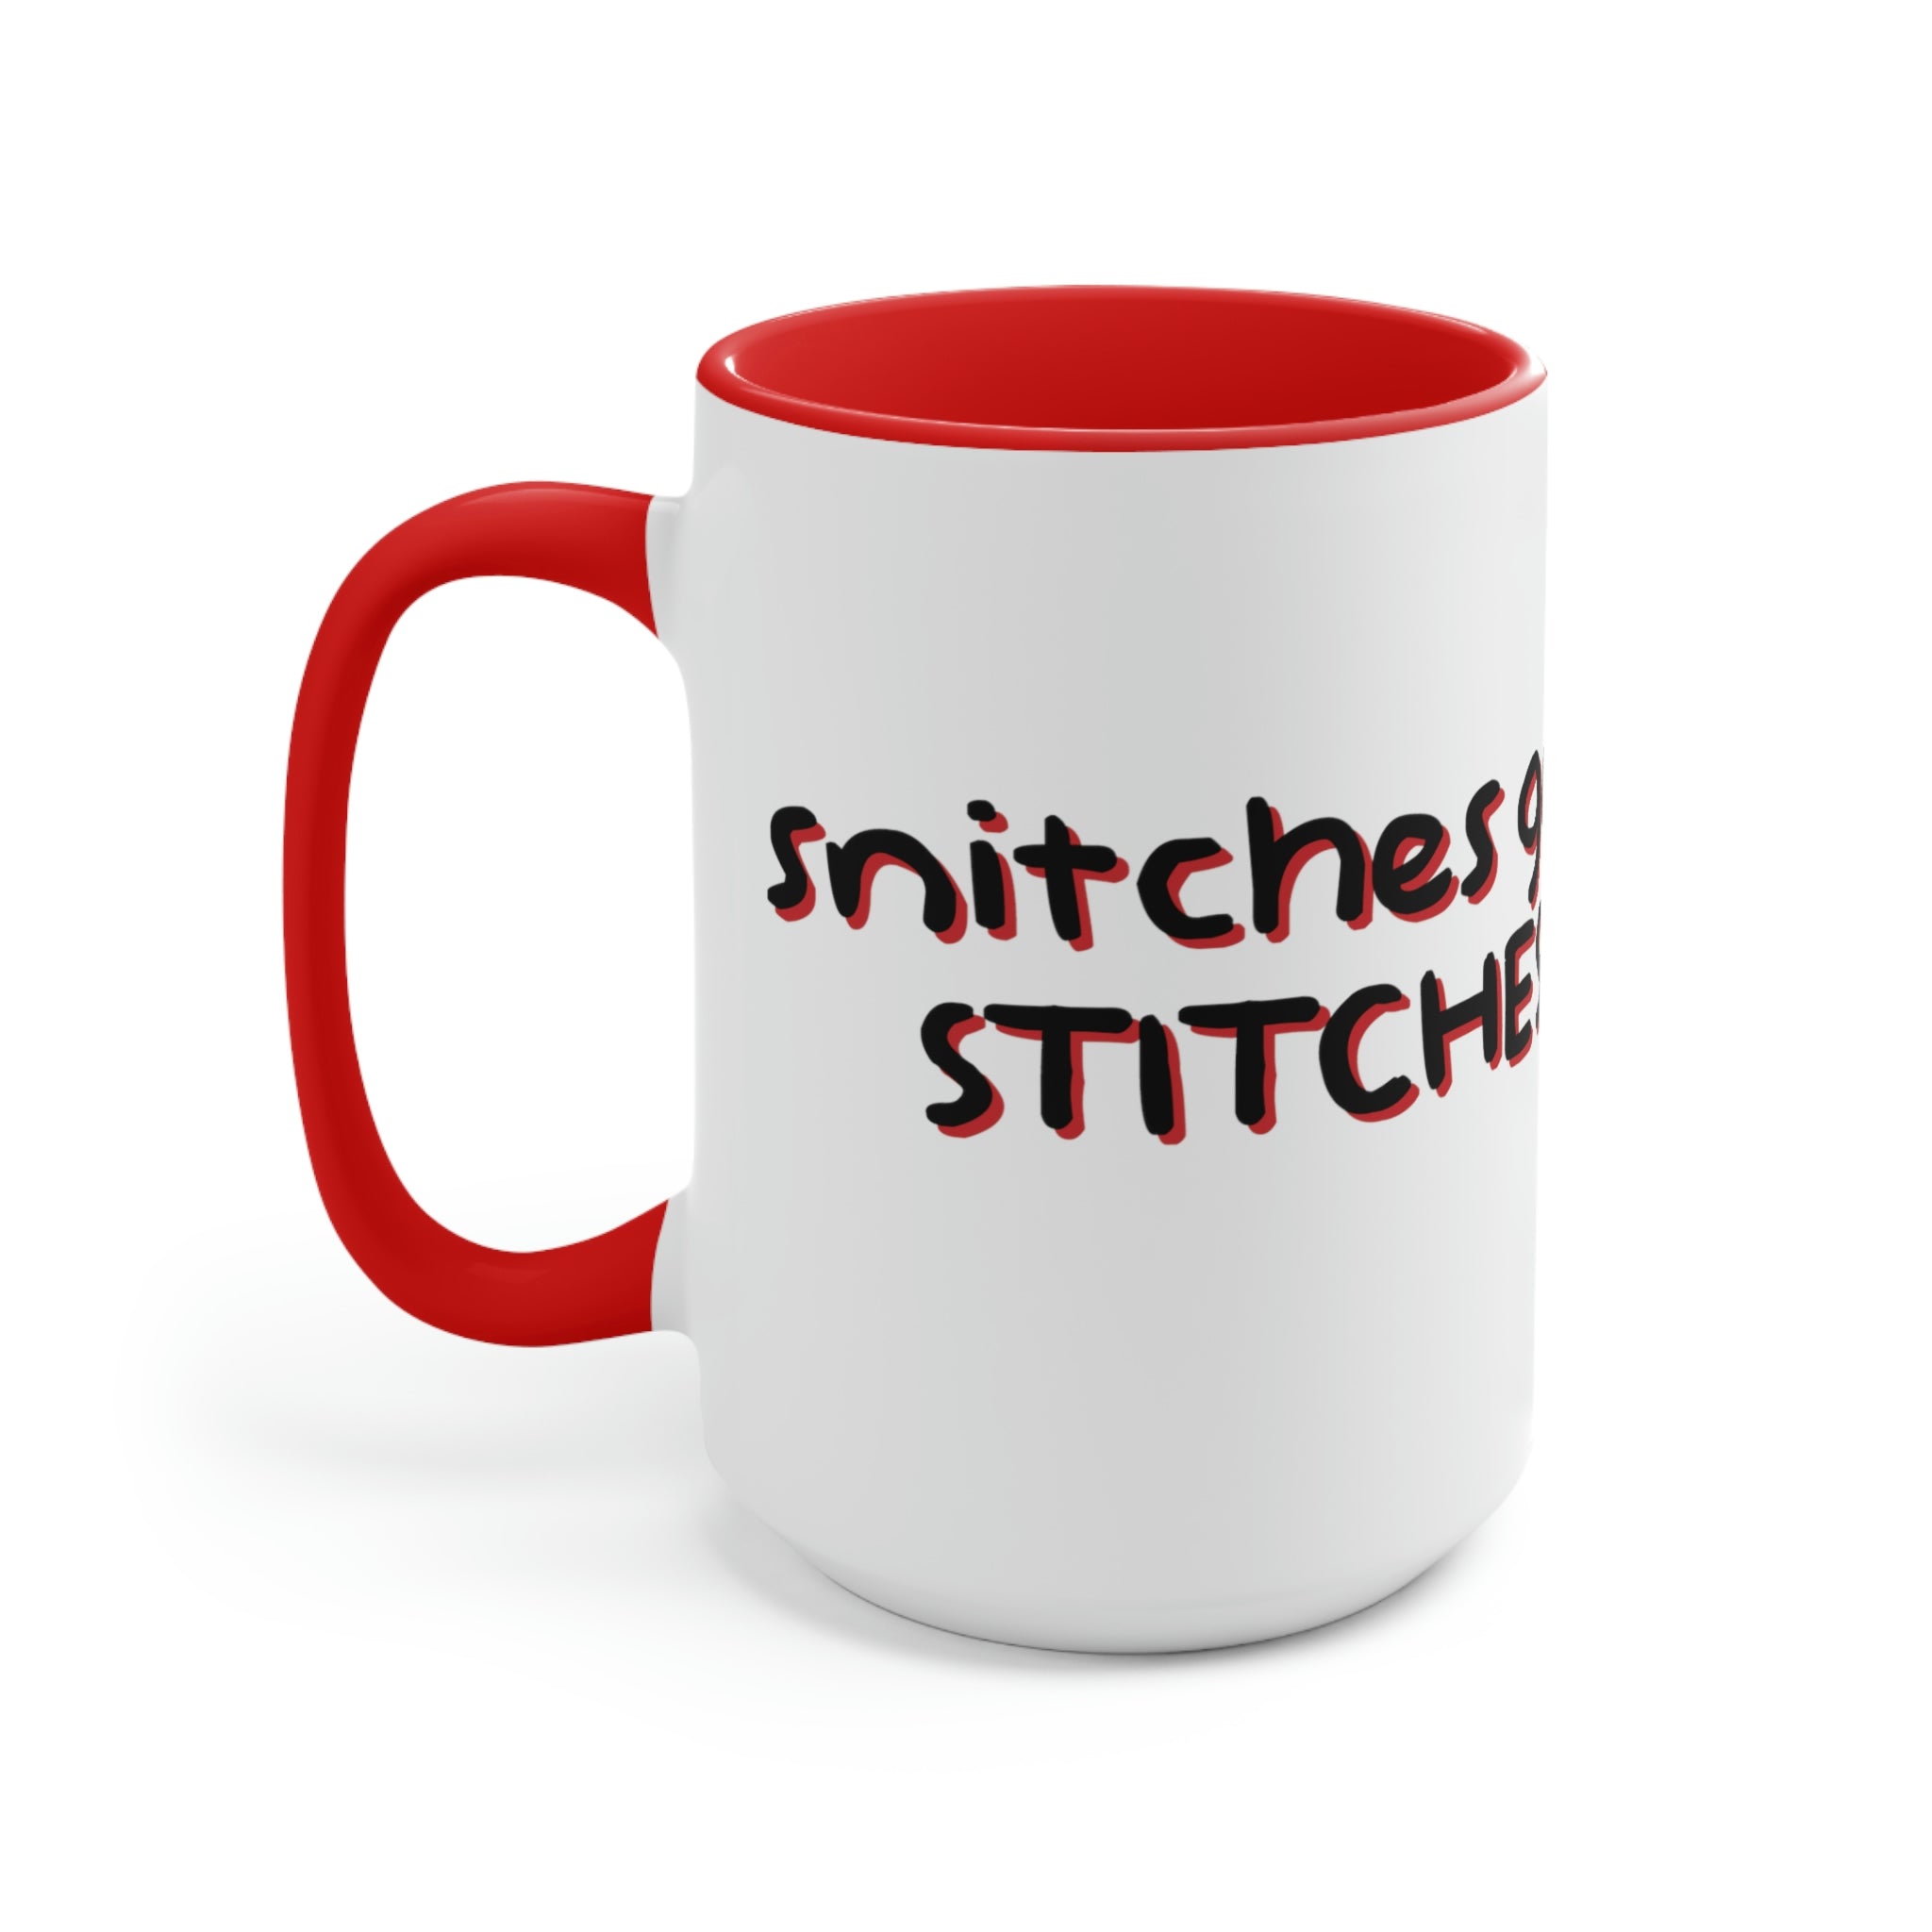 Snitches Get Stiches Mug, 15oz